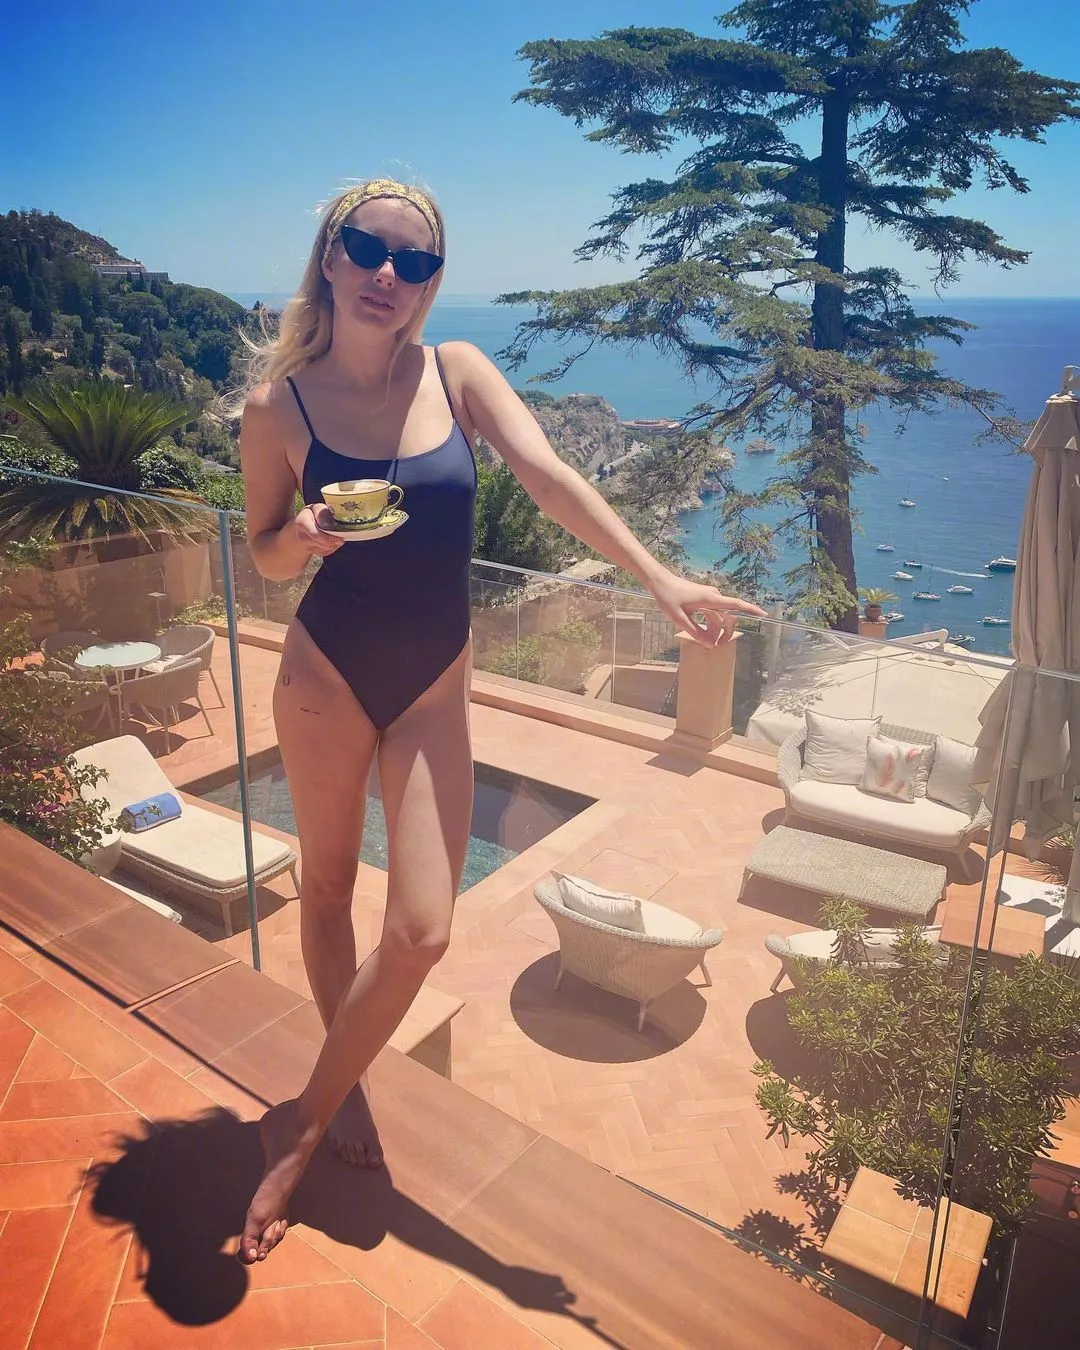 Emma Roberts shares her recent vacation photos | FMV6